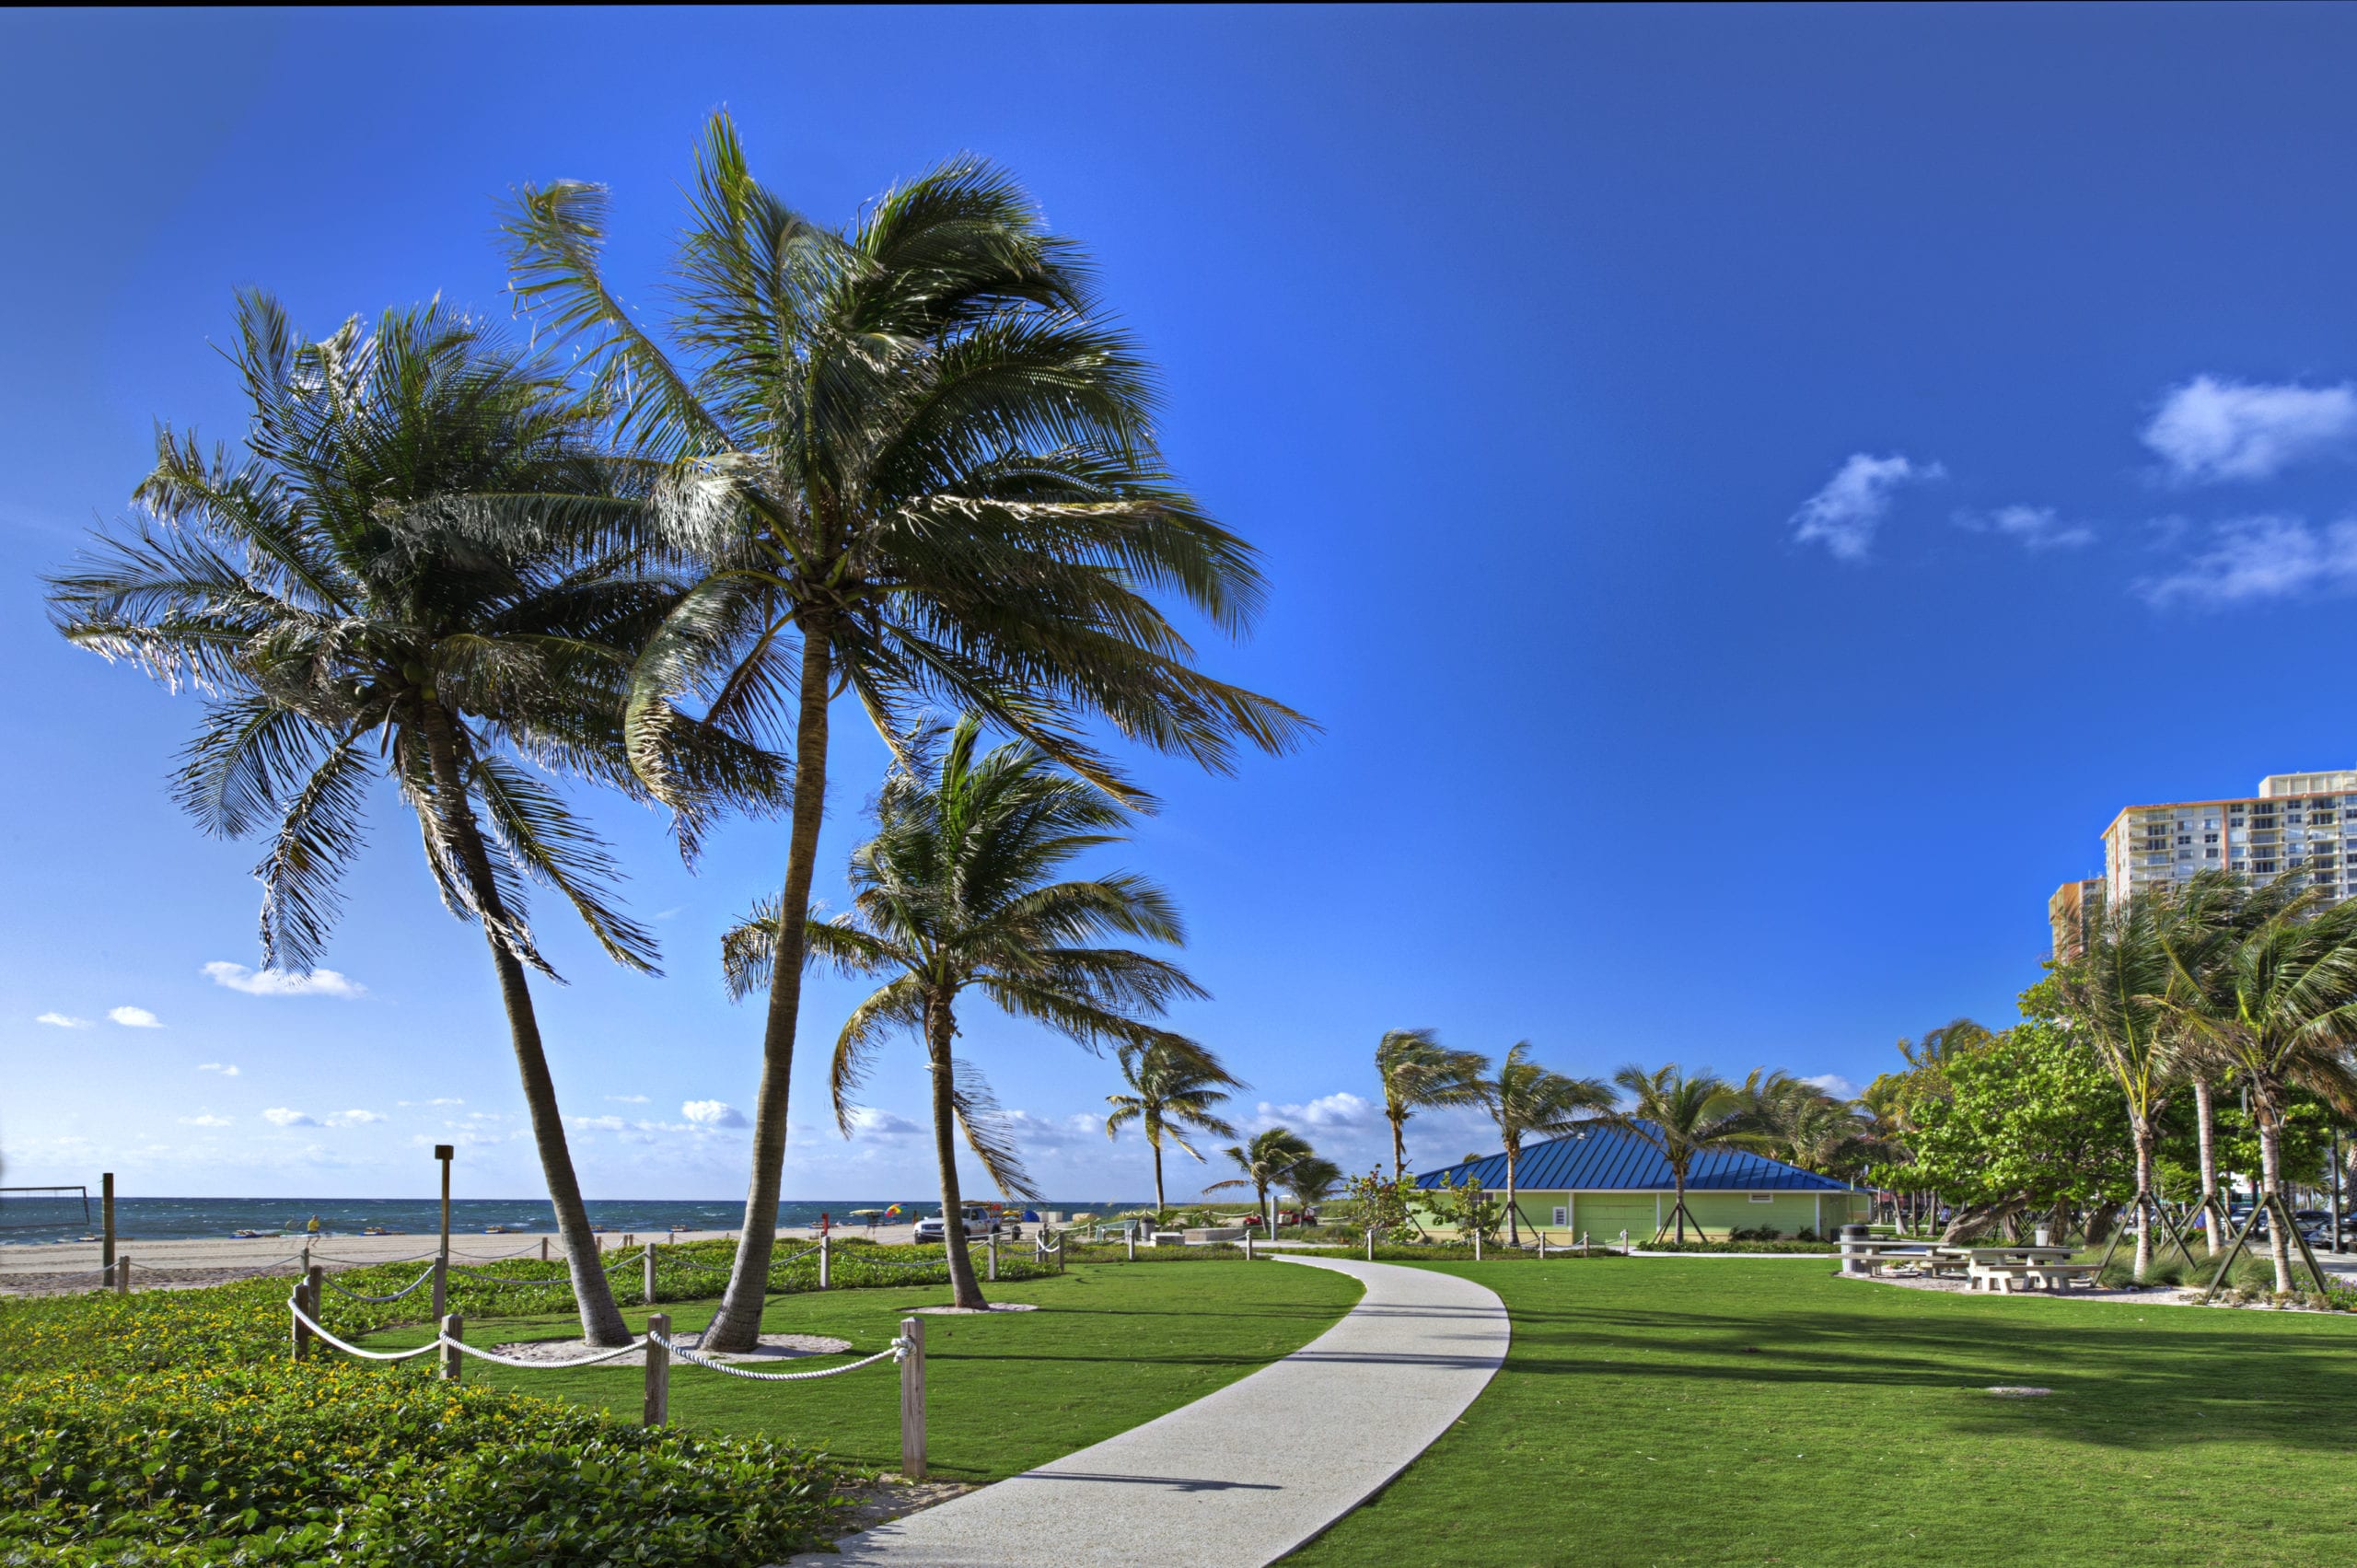 EDSA Pompano Beach Boulevard grounds with palm trees, beach and buildings